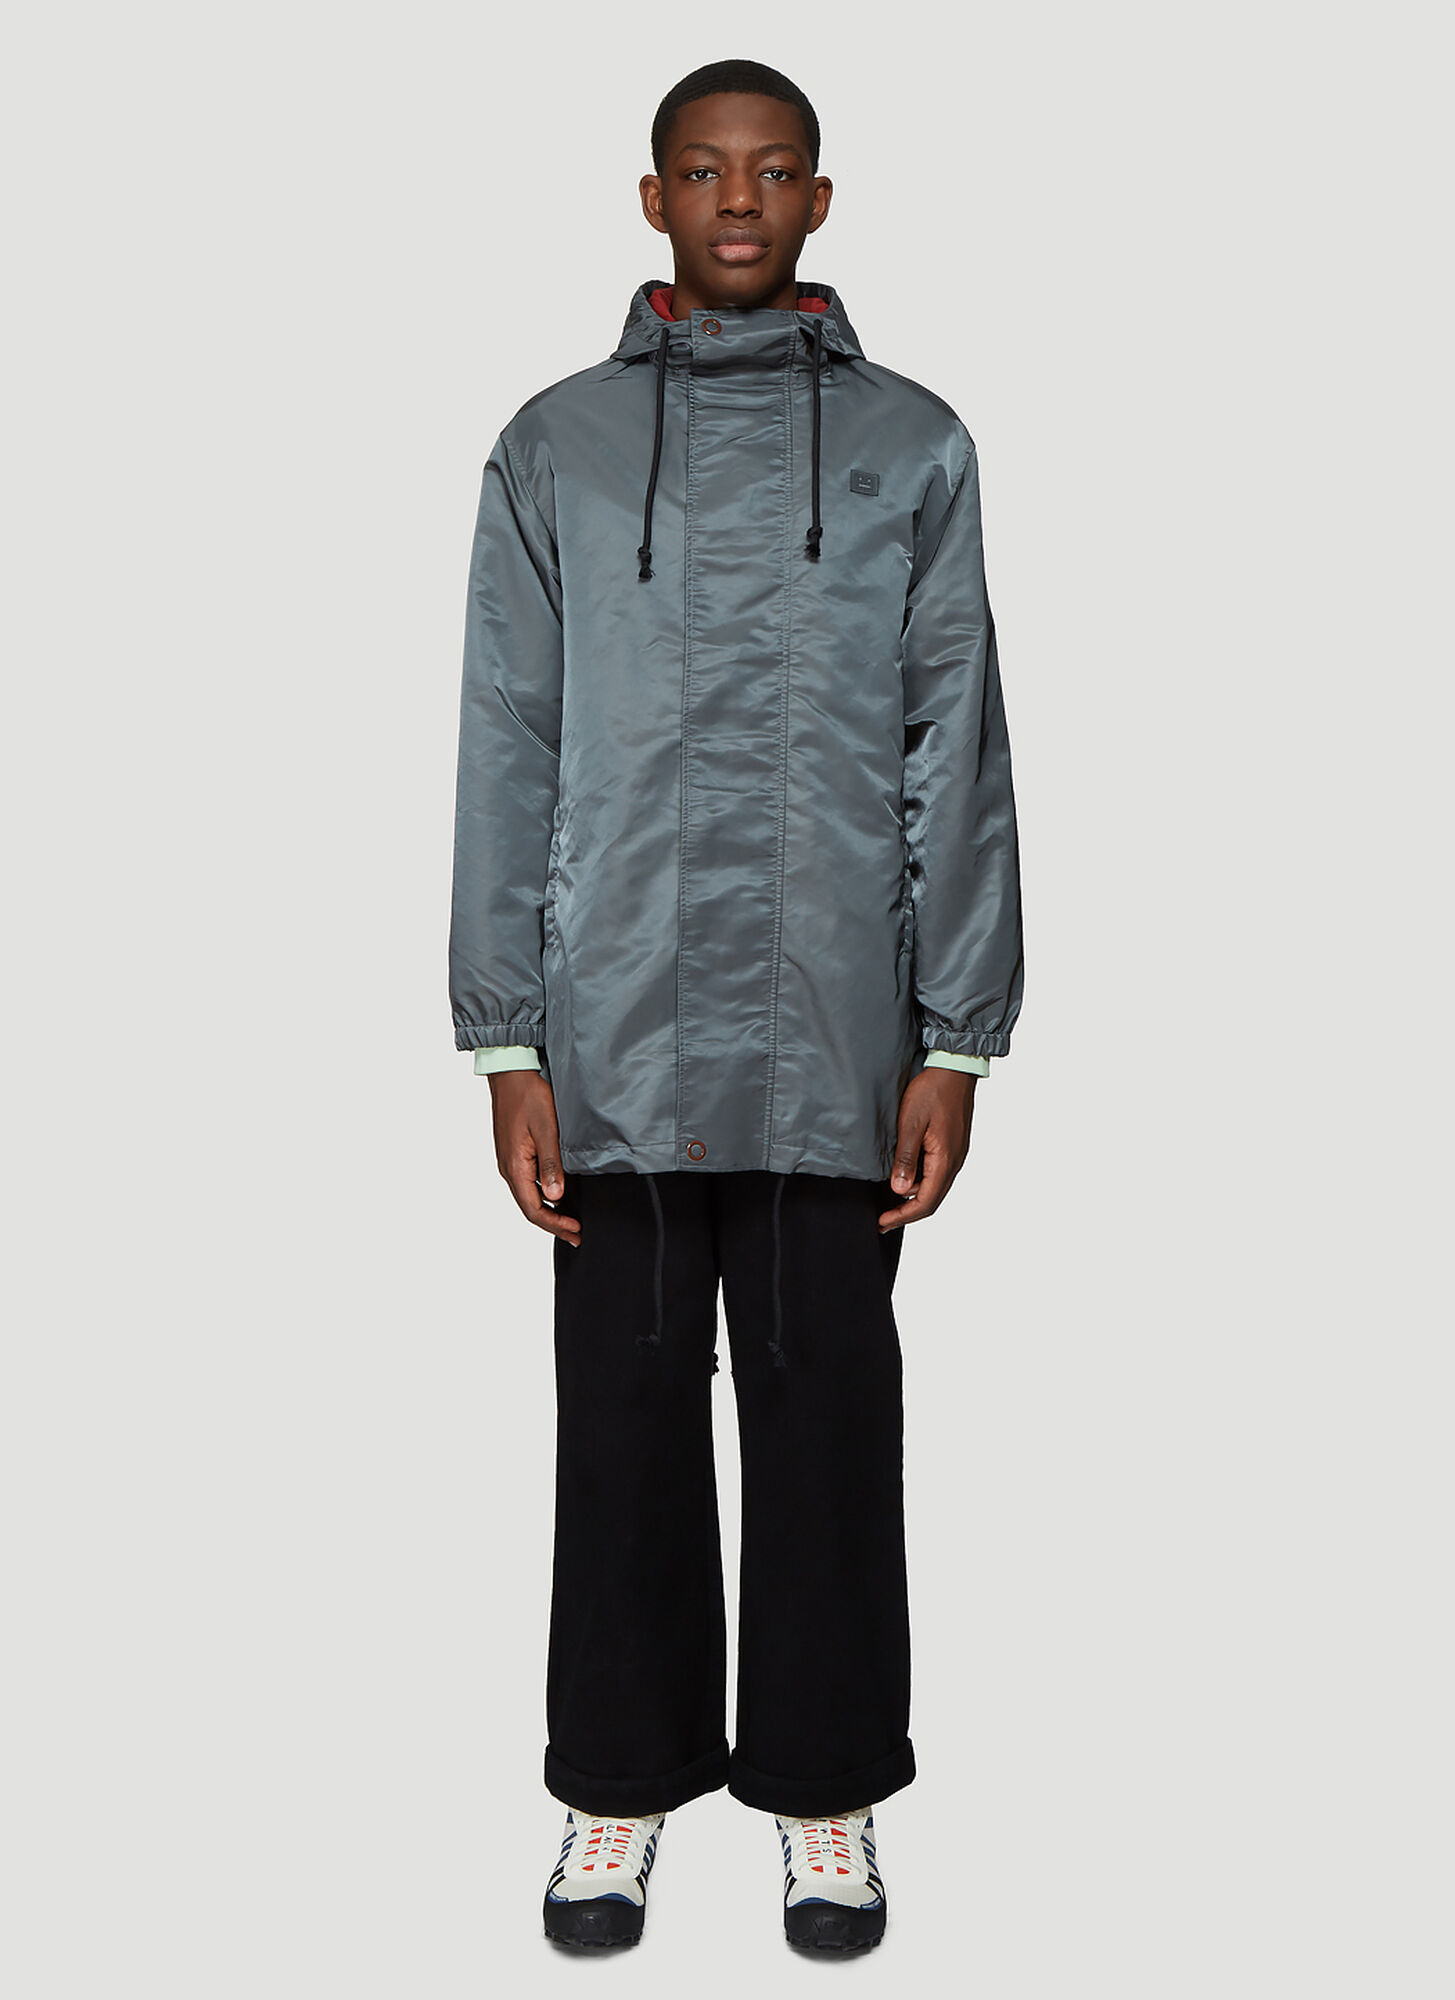 Acne Studios Osborn Hooded Parka Jacket in Grey size M | The Fashionisto